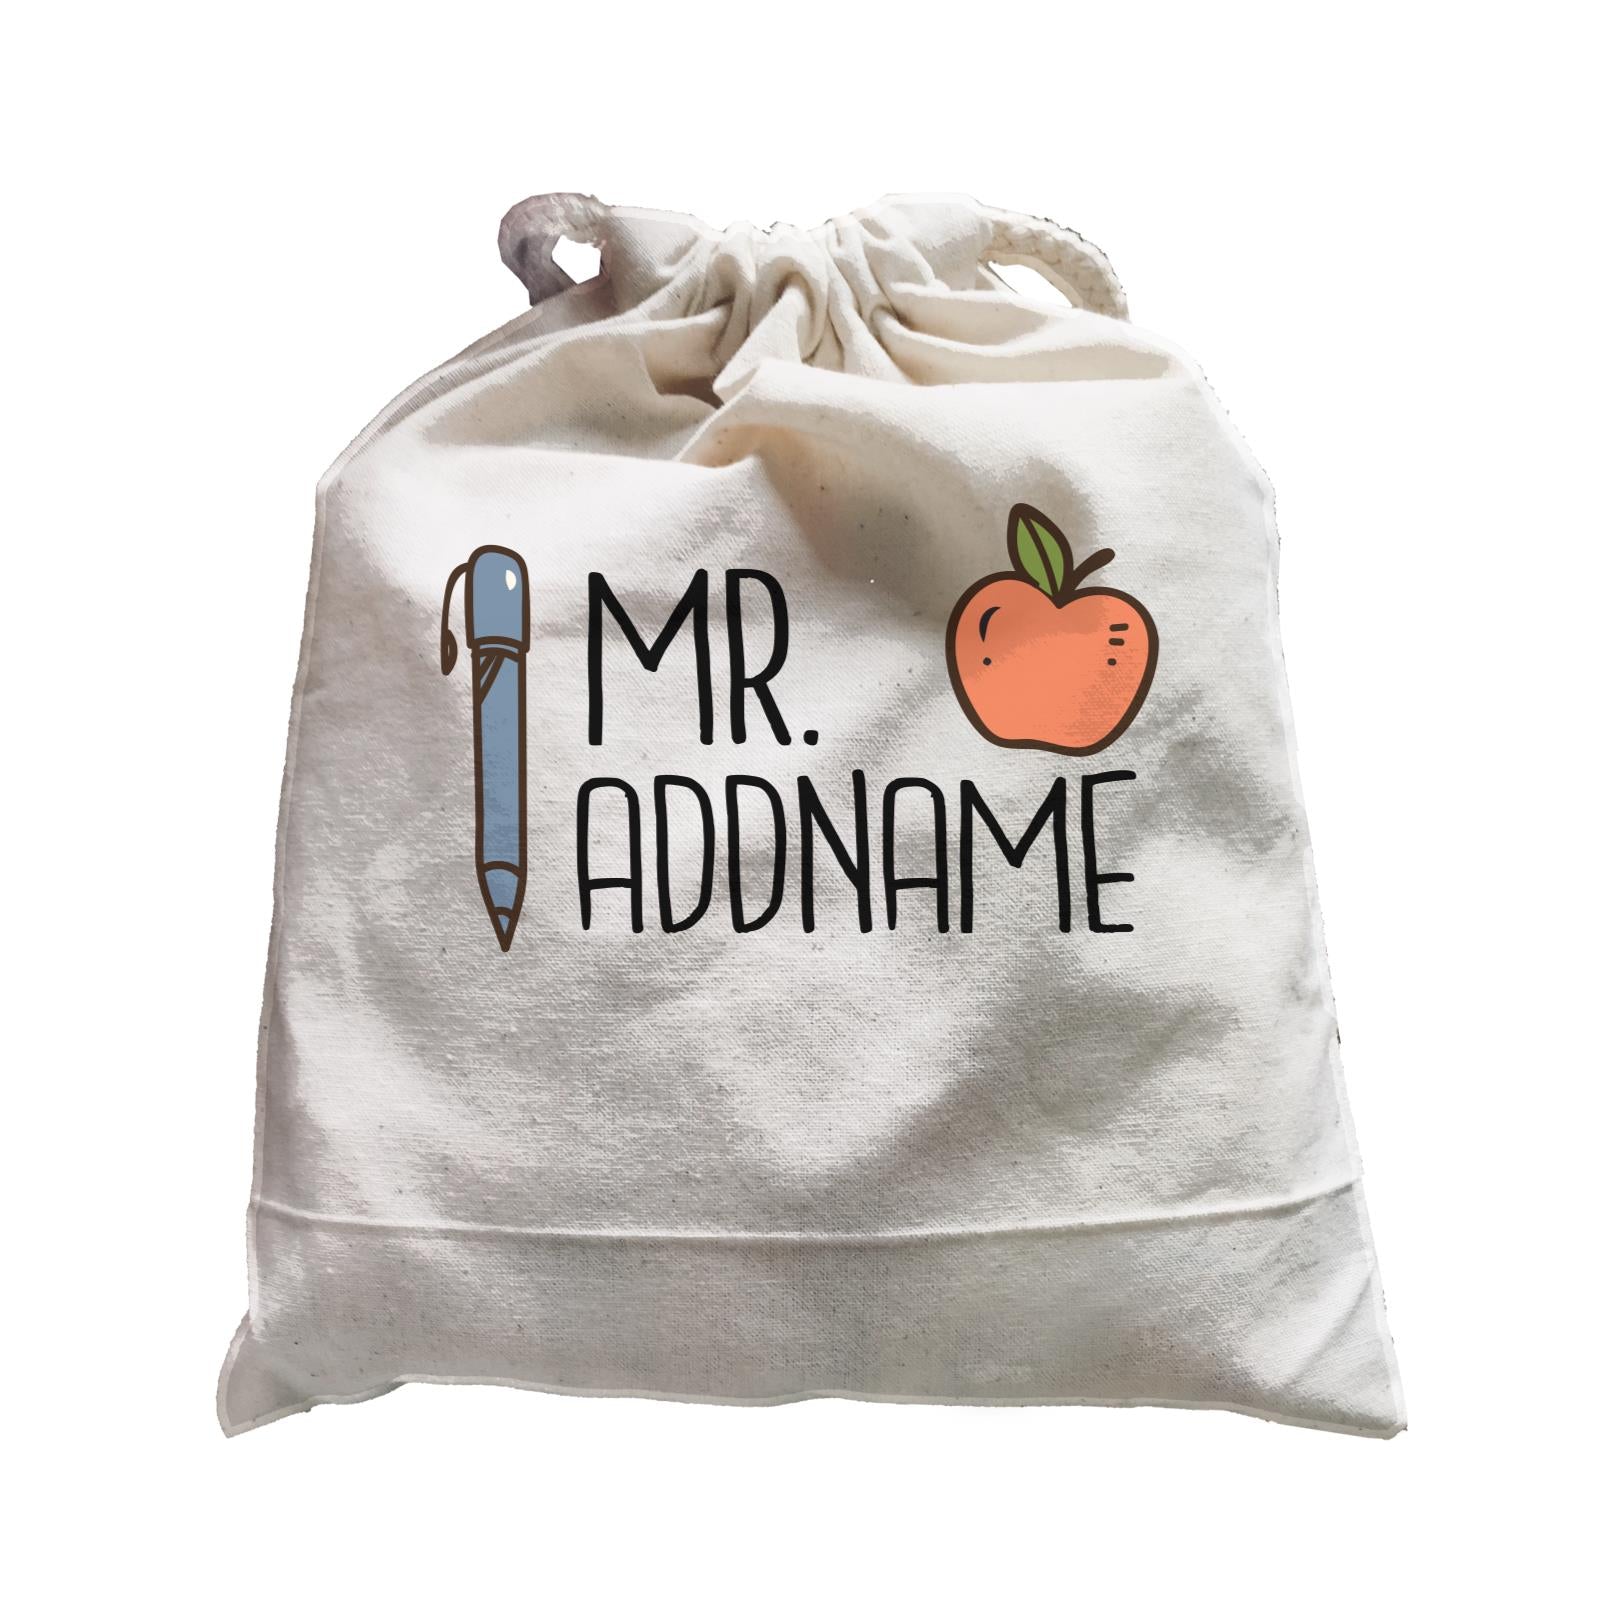 Teacher Addname Apple And Pen Mr Addname Satchel